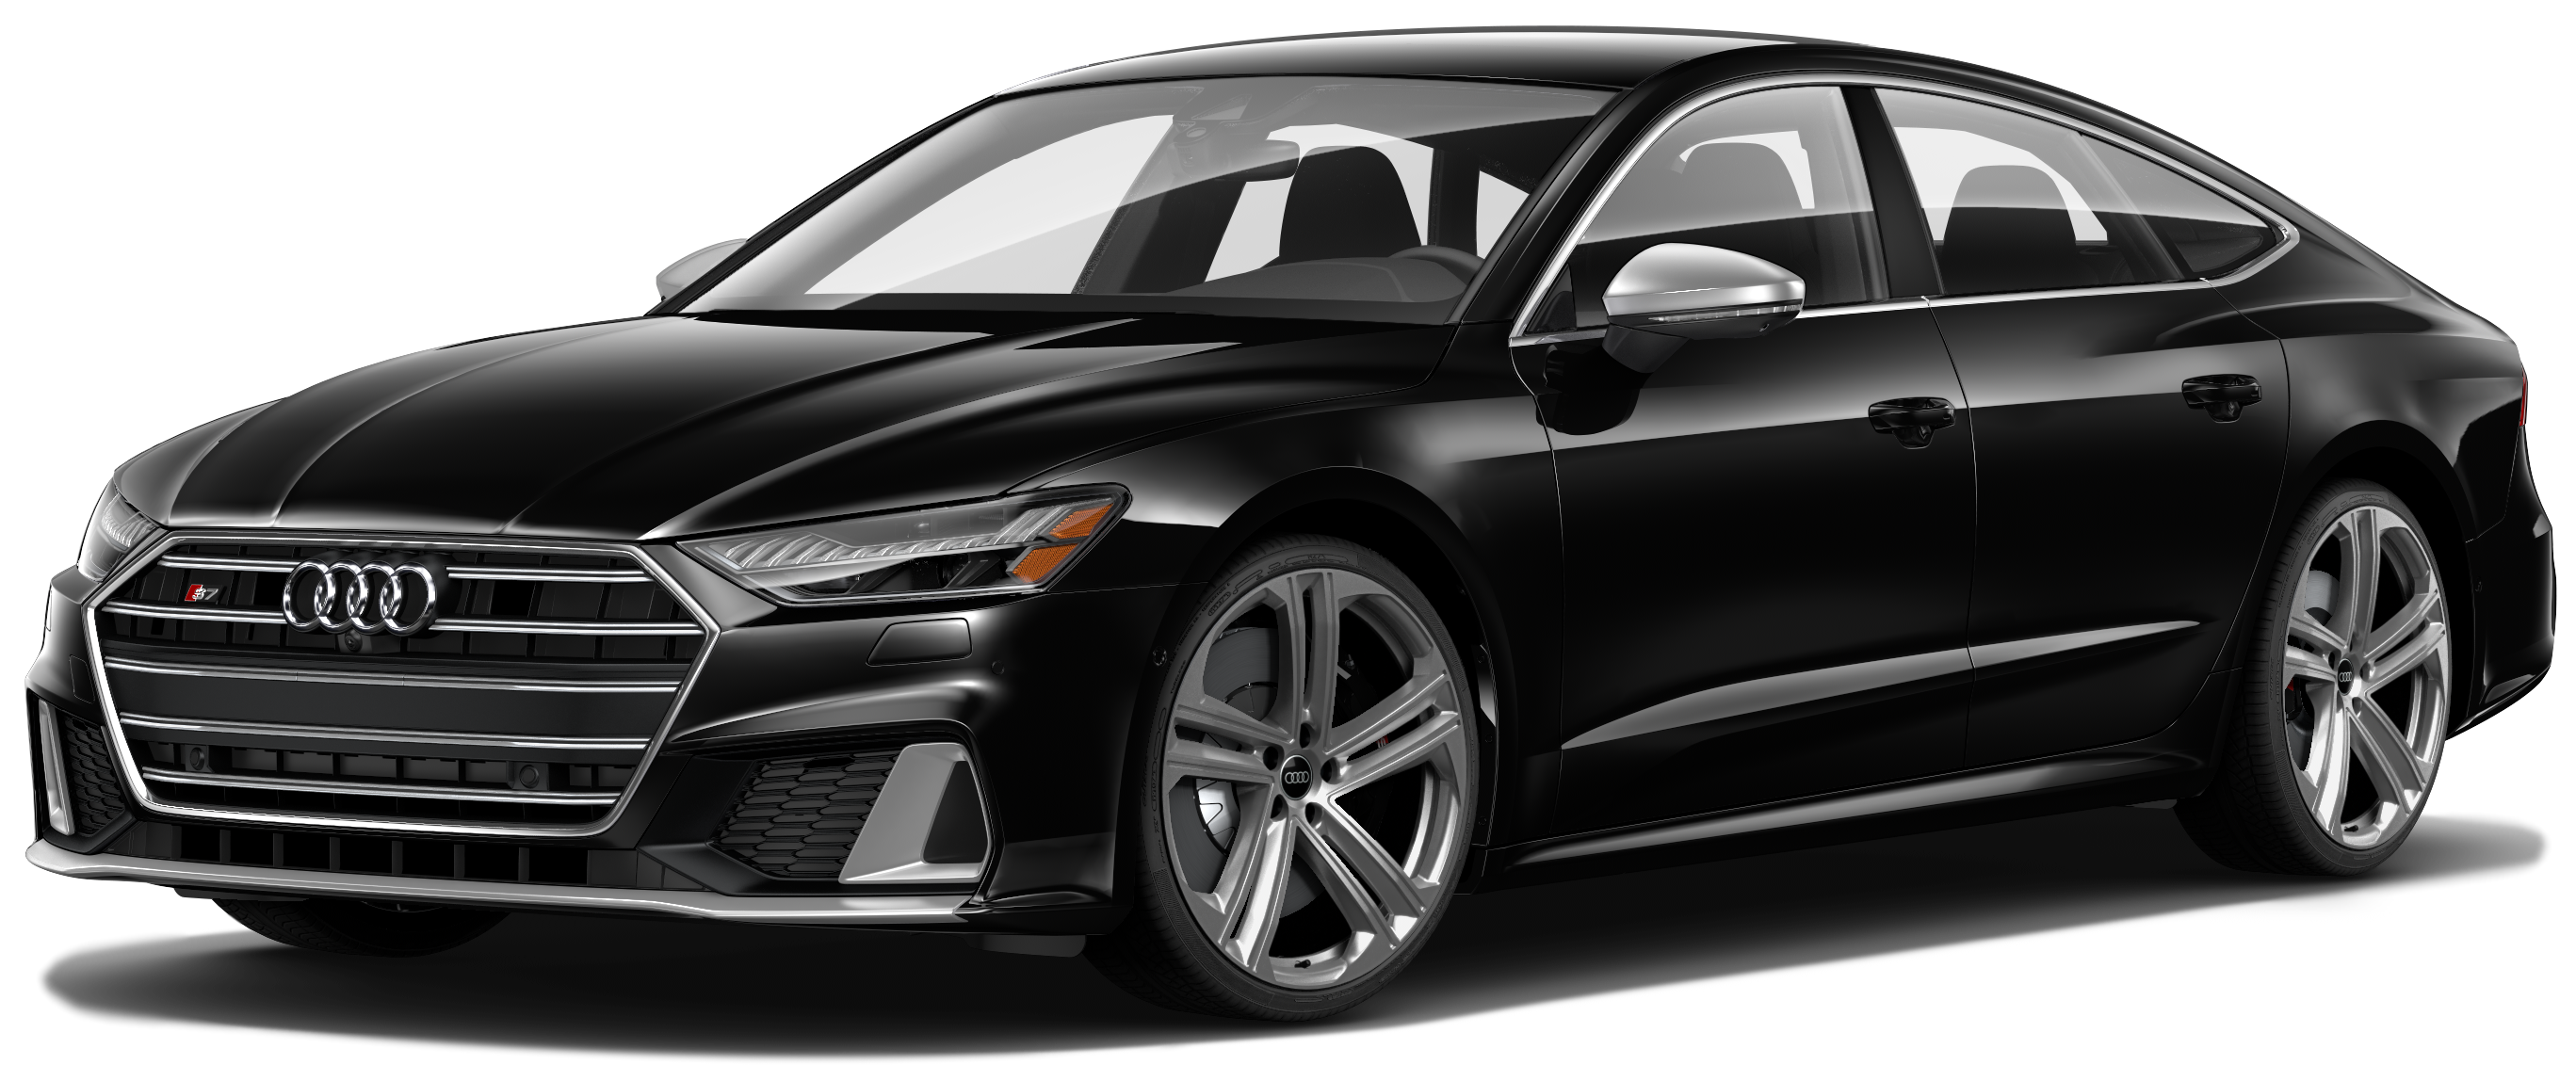 2021 Audi S7 Incentives, Specials & Offers in San Antonio TX